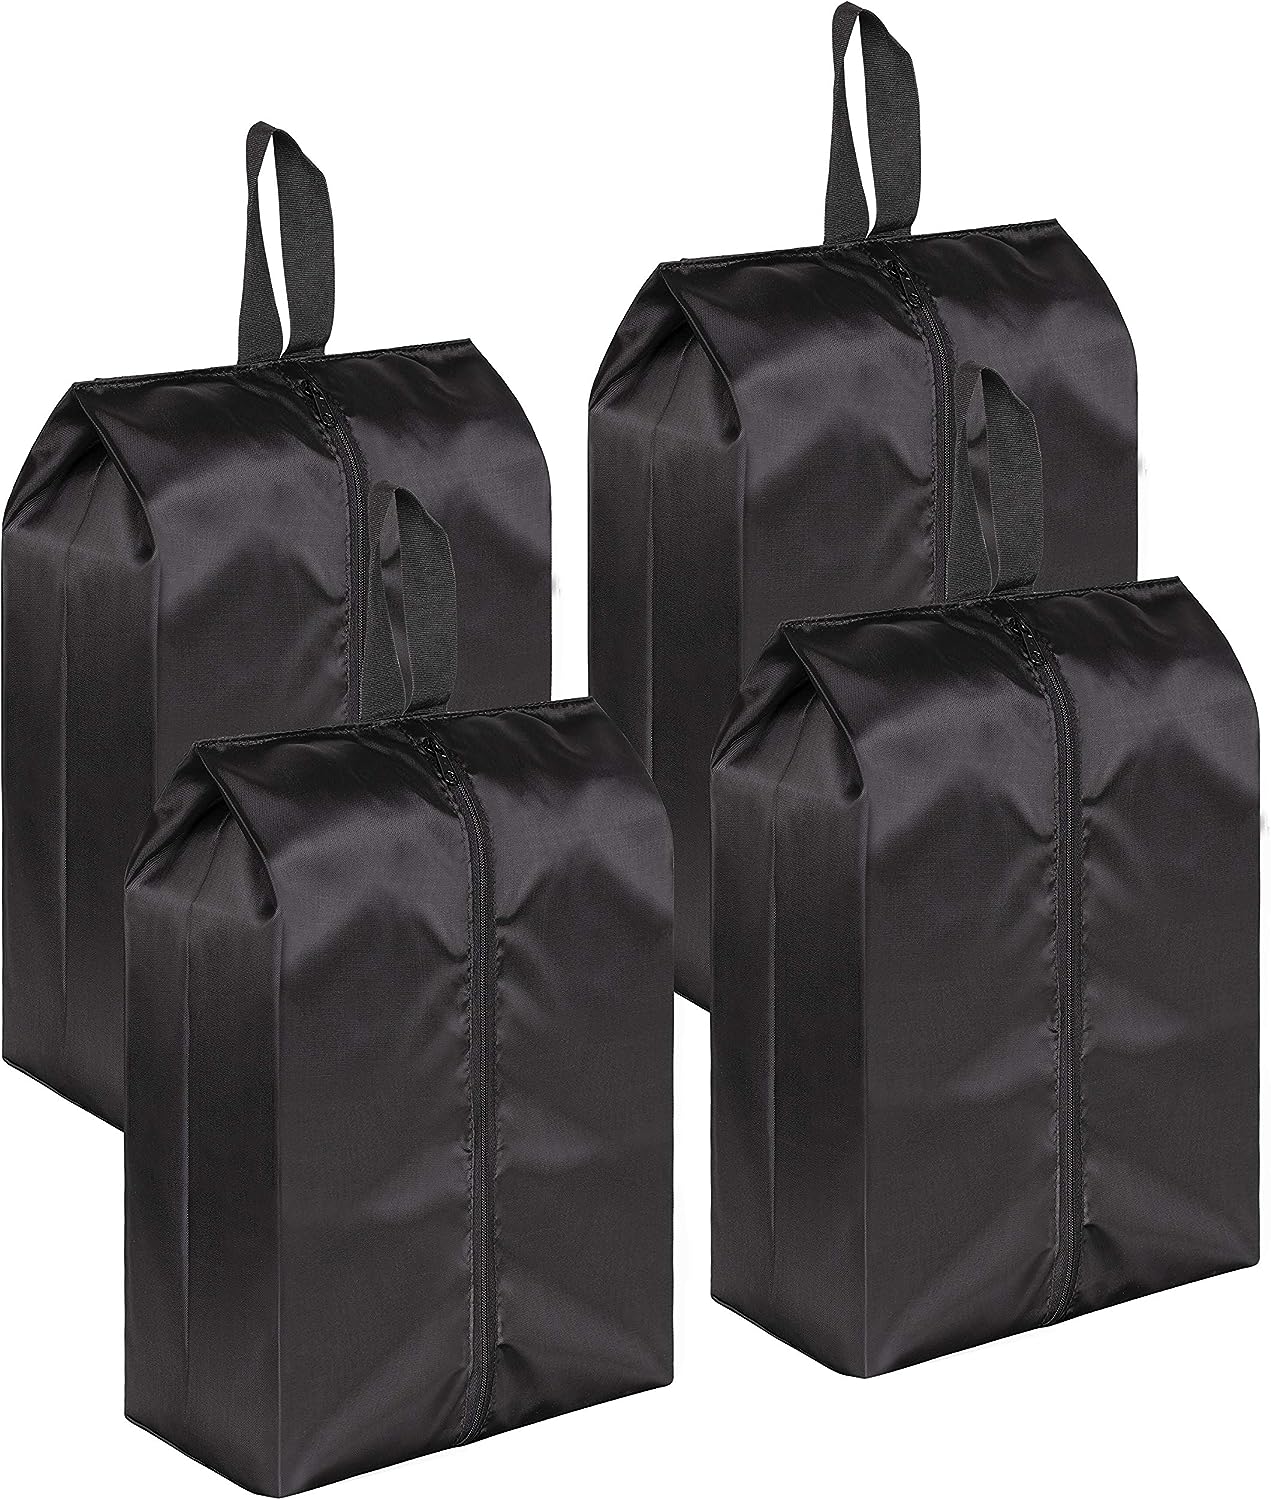 MISSLO Portable Nylon Travel Shoe Bags with Zipper [...]